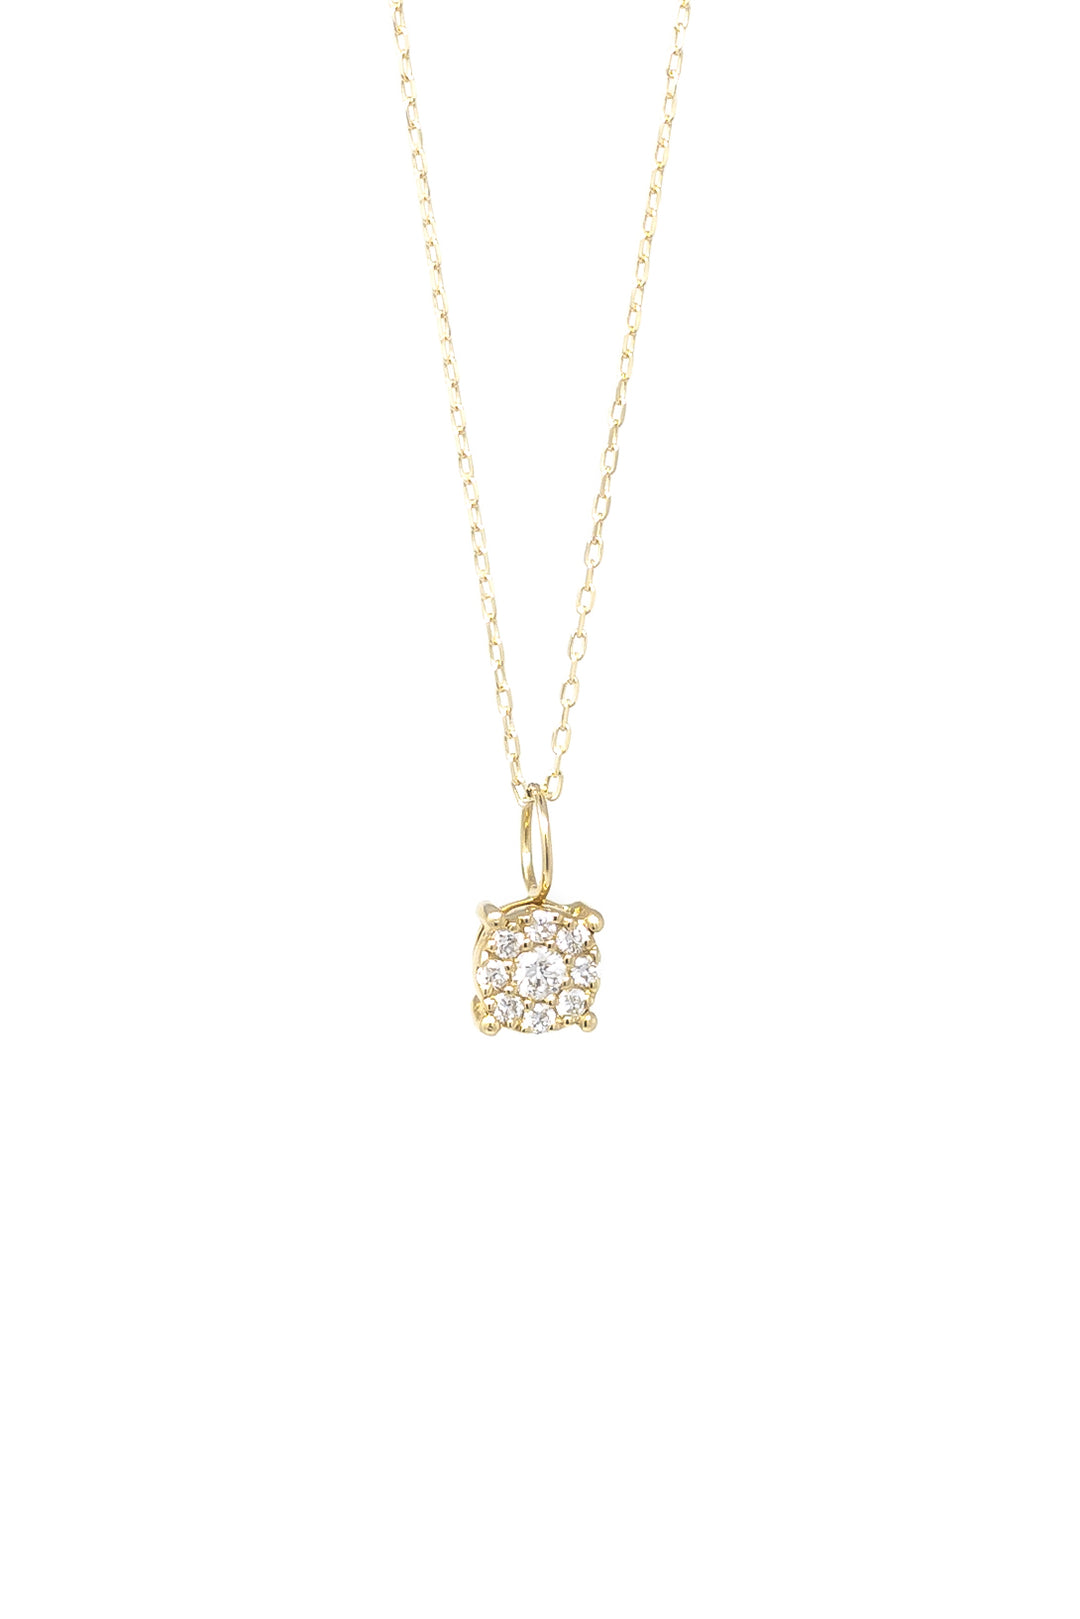 .15ct DIAMOND ROUND CLUSTER SET PENDANT NECKLACE - Kingfisher Road - Online Boutique